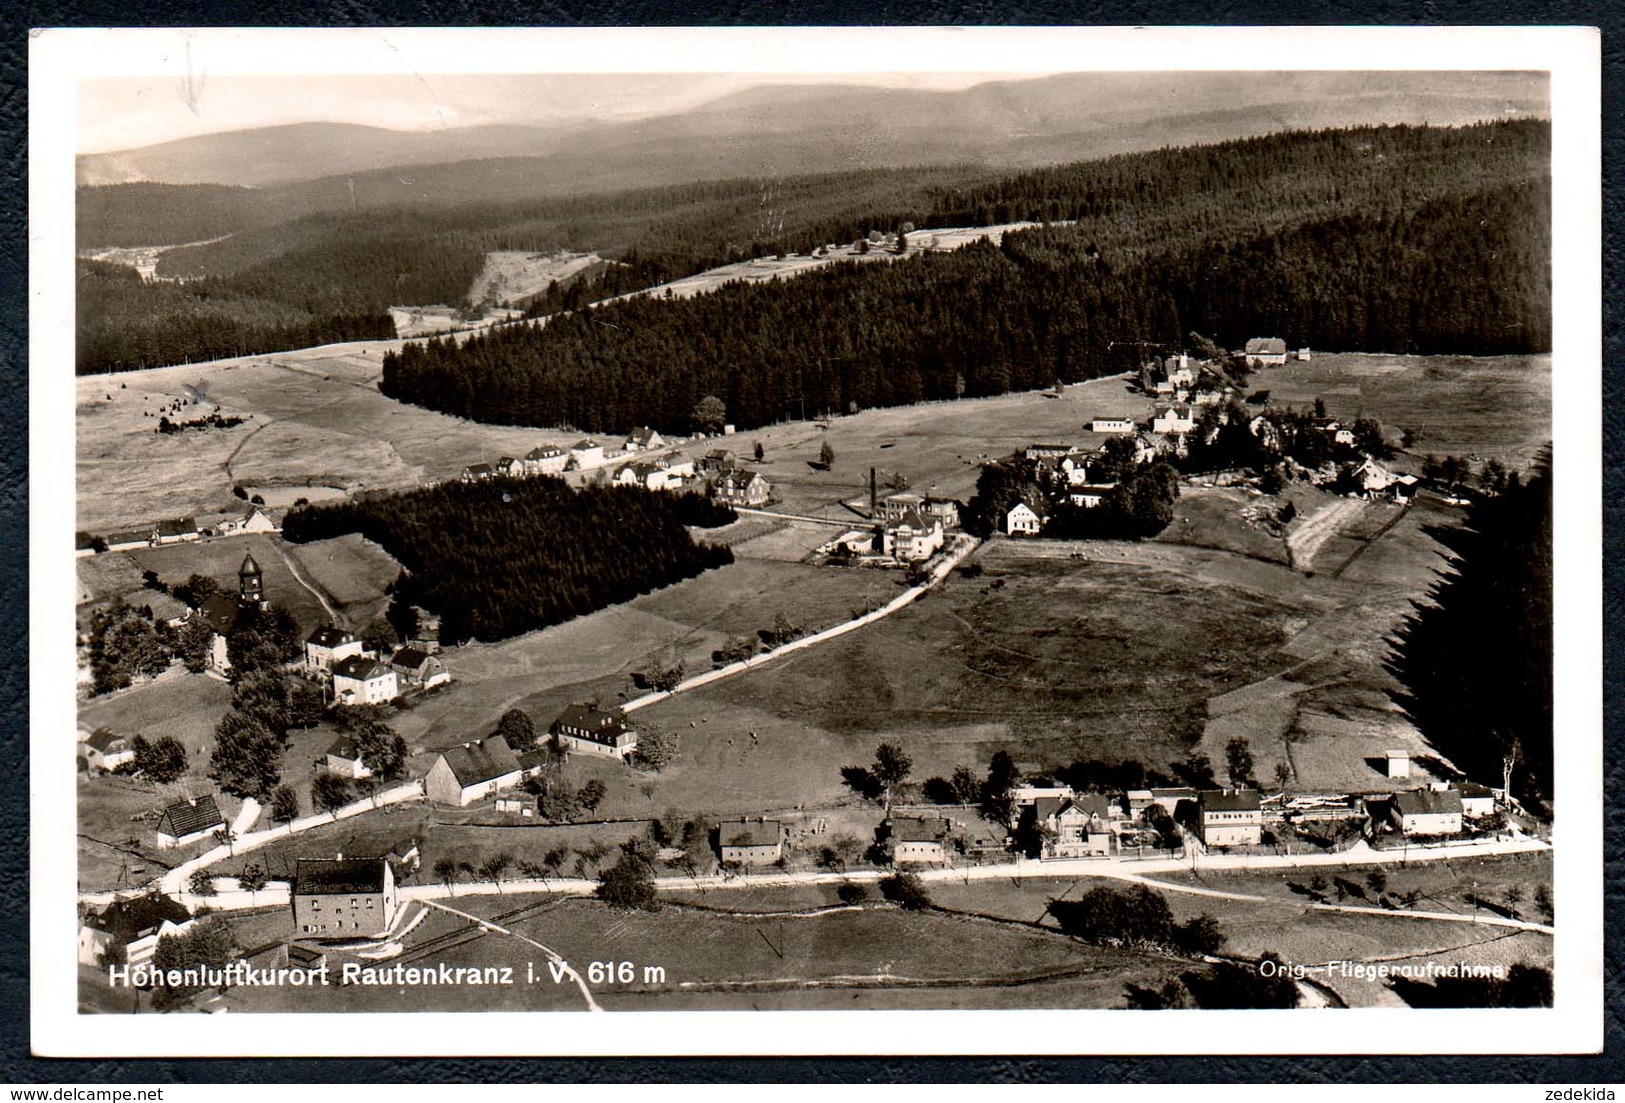 A8456 - Rautenkranz I. V. - Orig. Fliegeraufnahme Luftbild - RLM 36234 - Gel 1937 - Ernst Assmus - Klingenthal